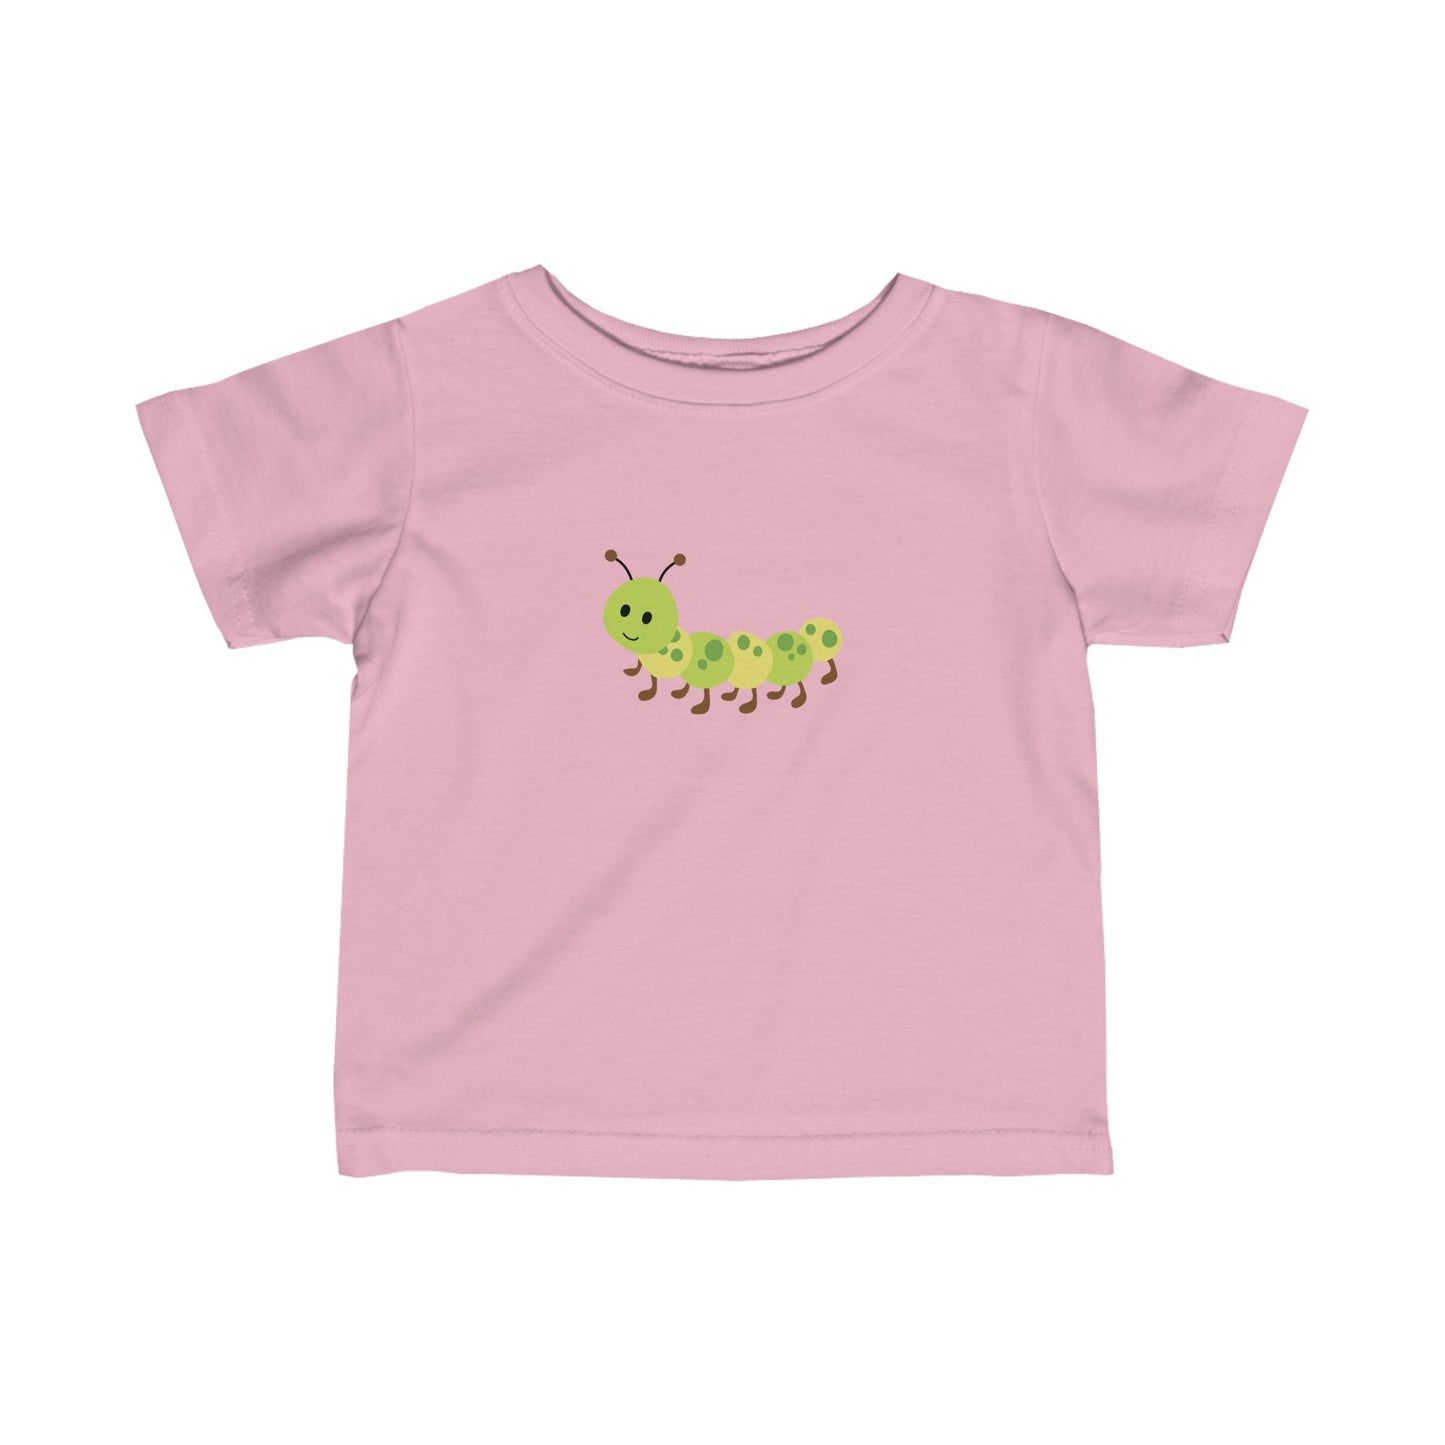 'Caterpillar' Infant Fine Jersey Tee with Caterpillar